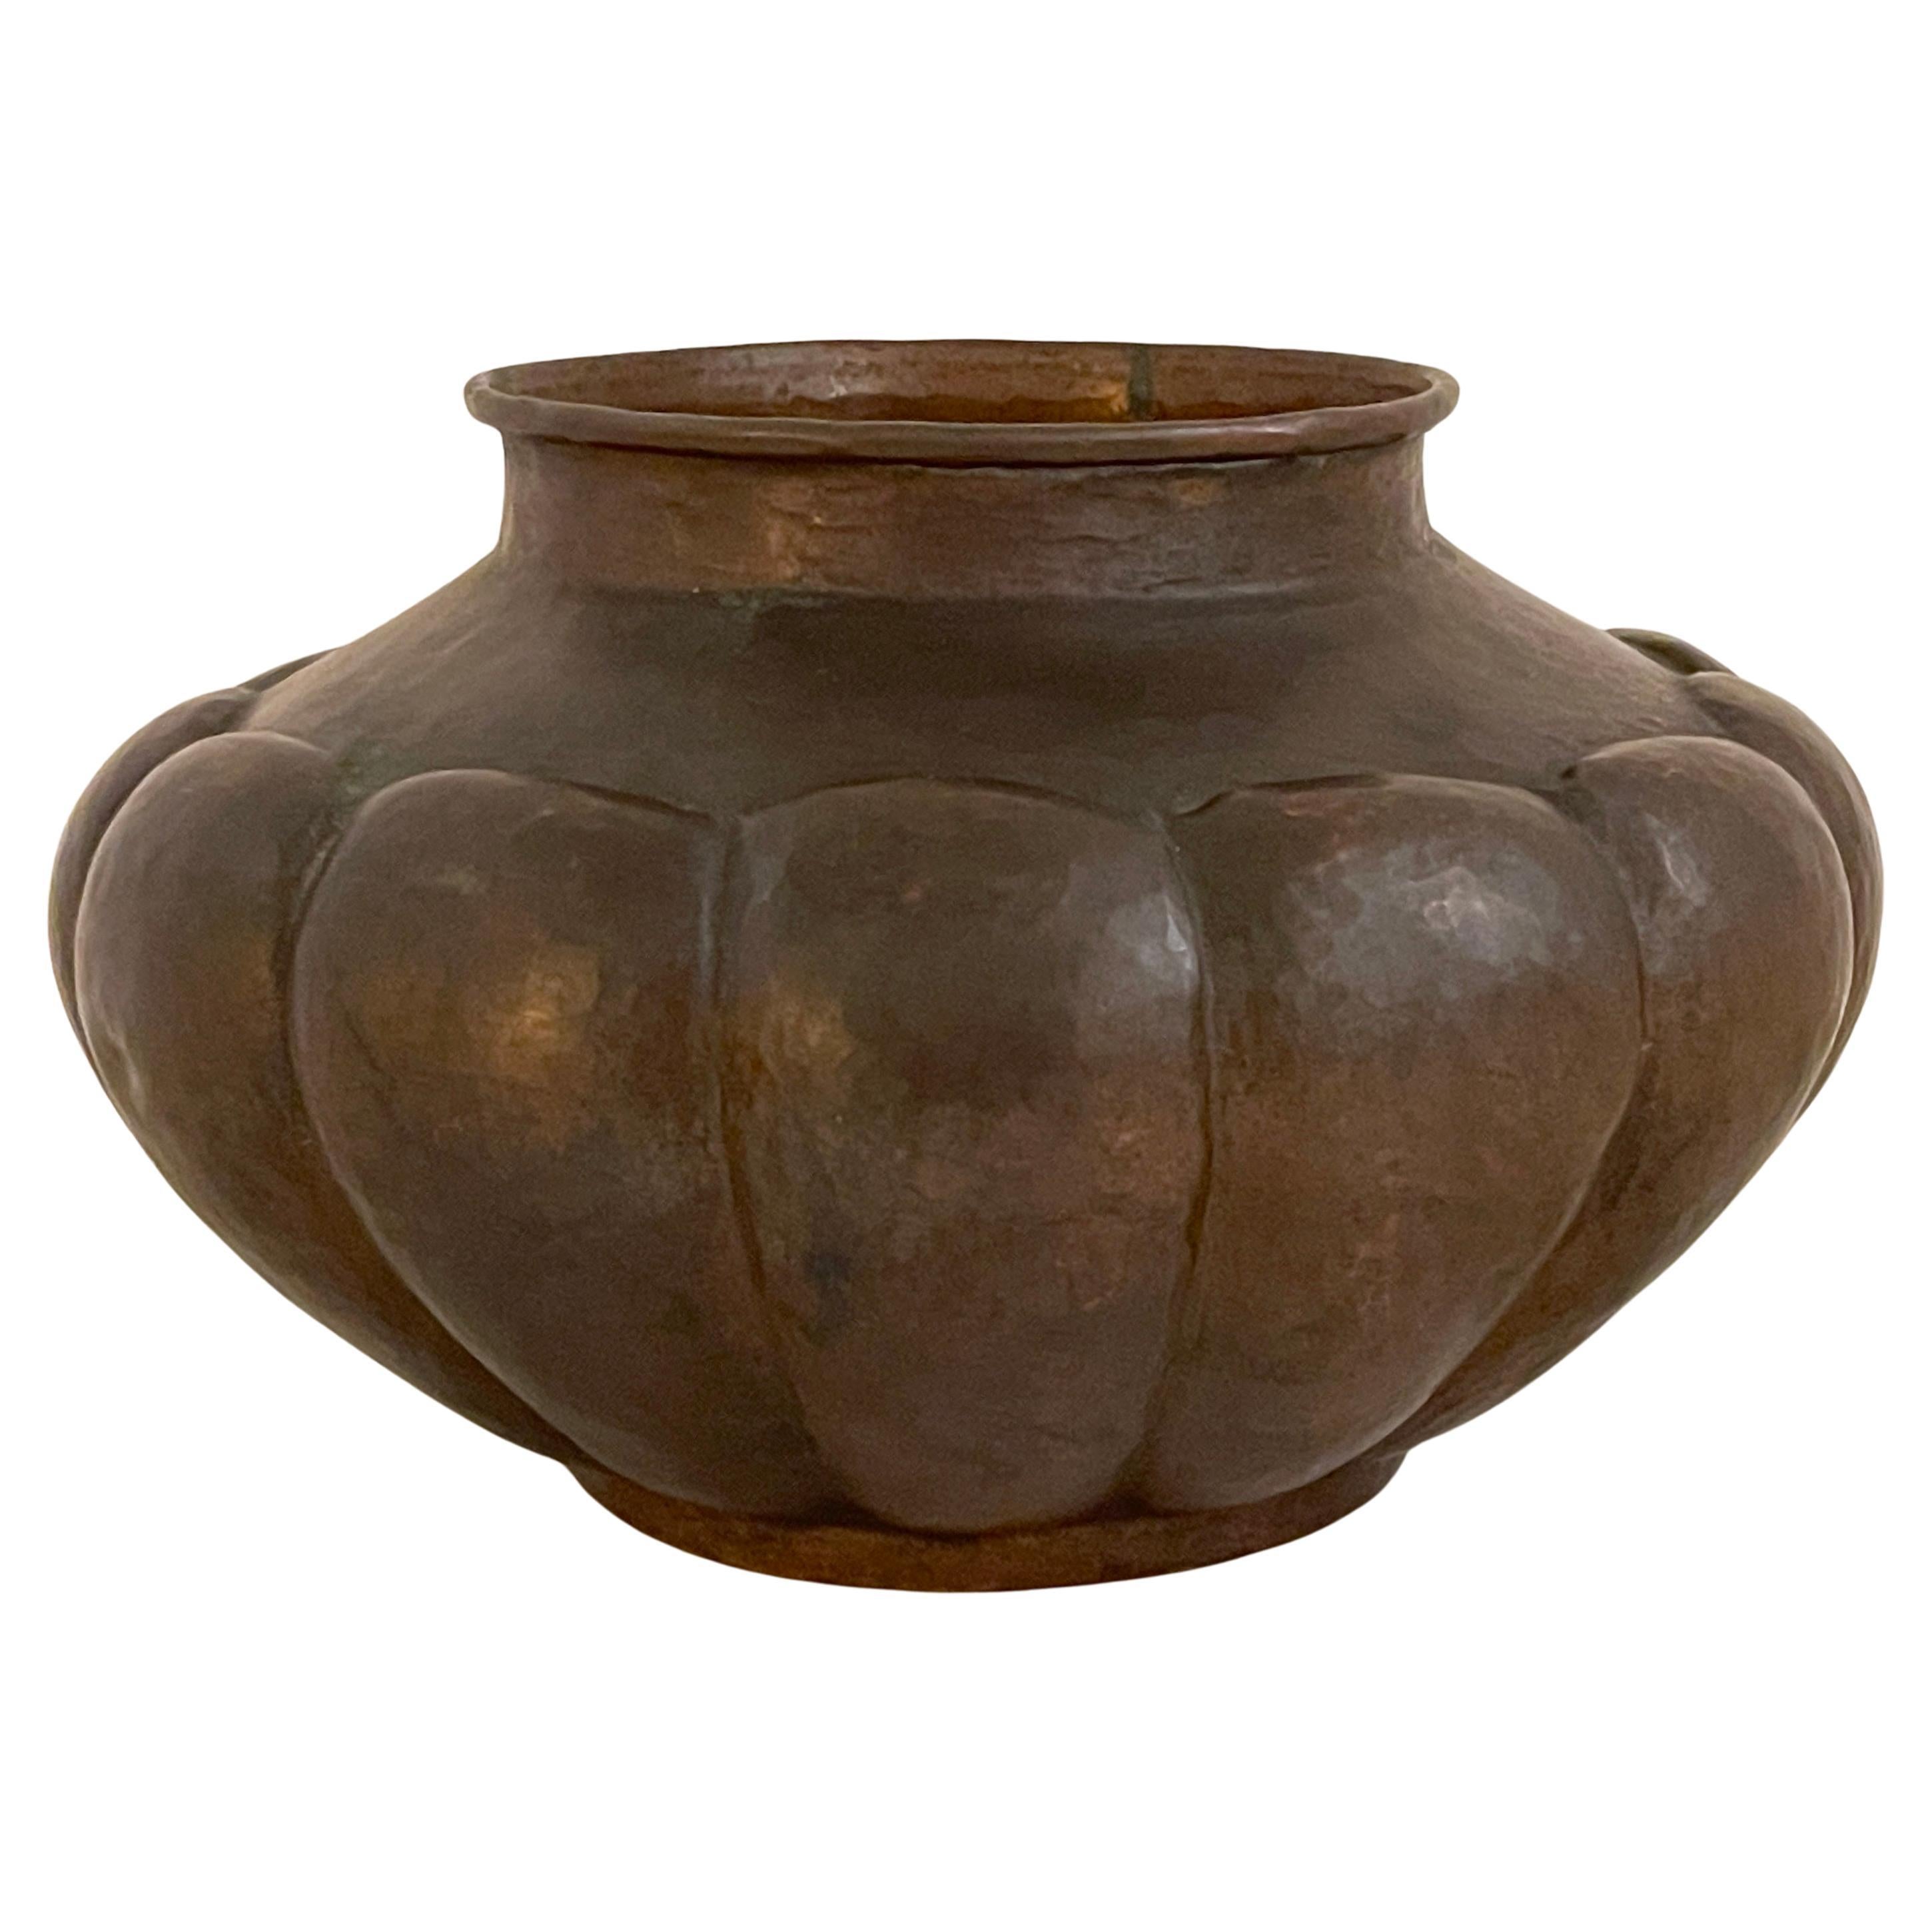 Roycroft Arts & Crafts Copper Forged Bulbous Vase, Roycroft Inn East Aurora NY